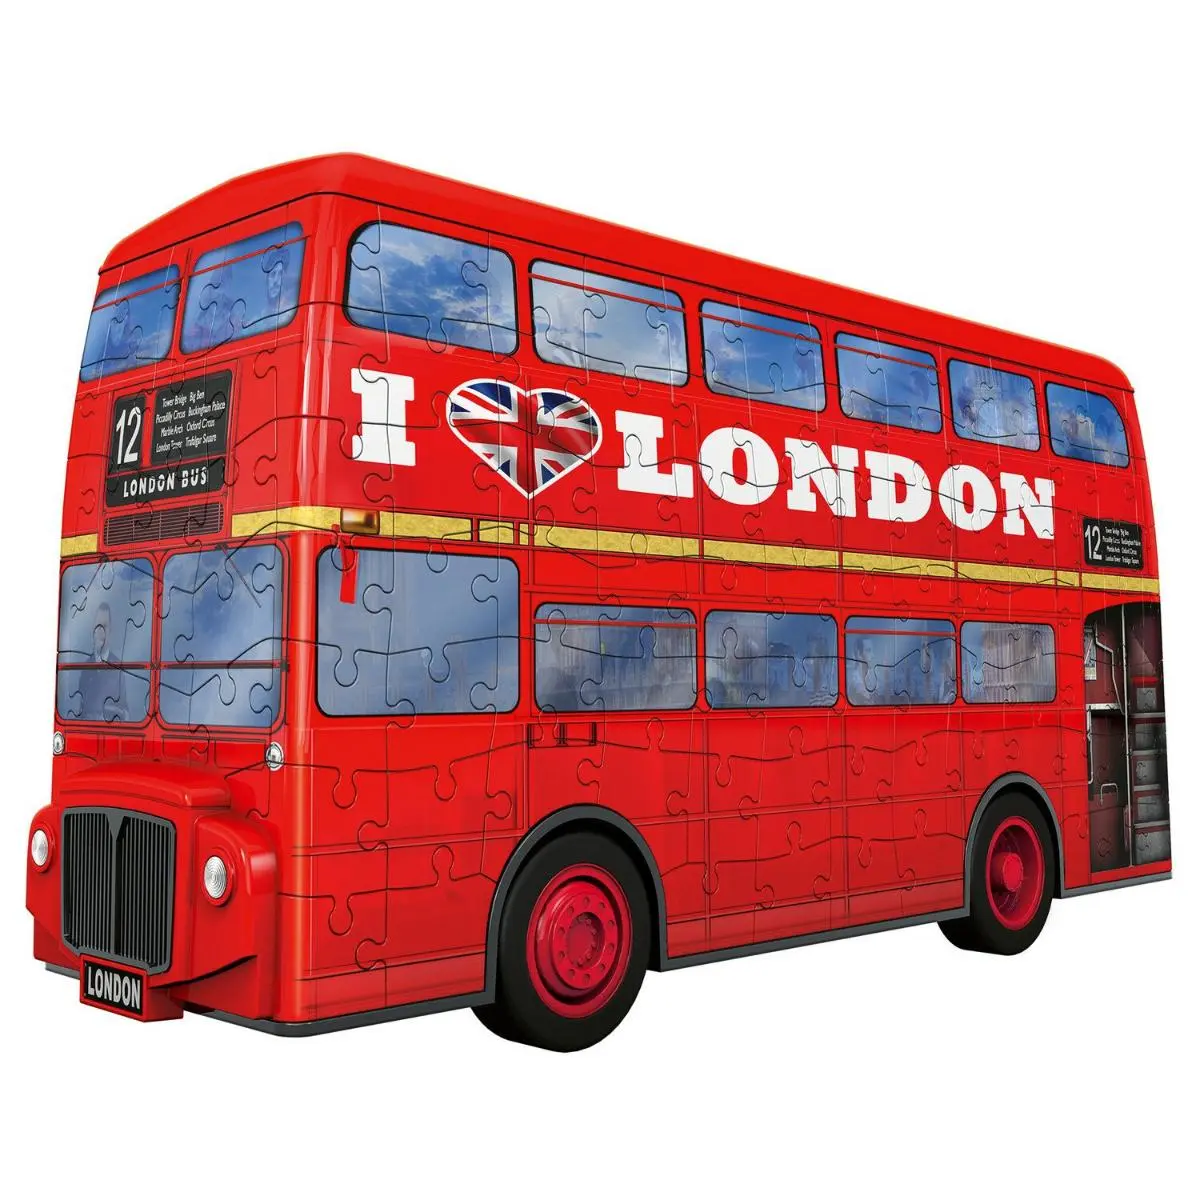 3D Пазл "Лондонский автобус" (216 эл.) - фото